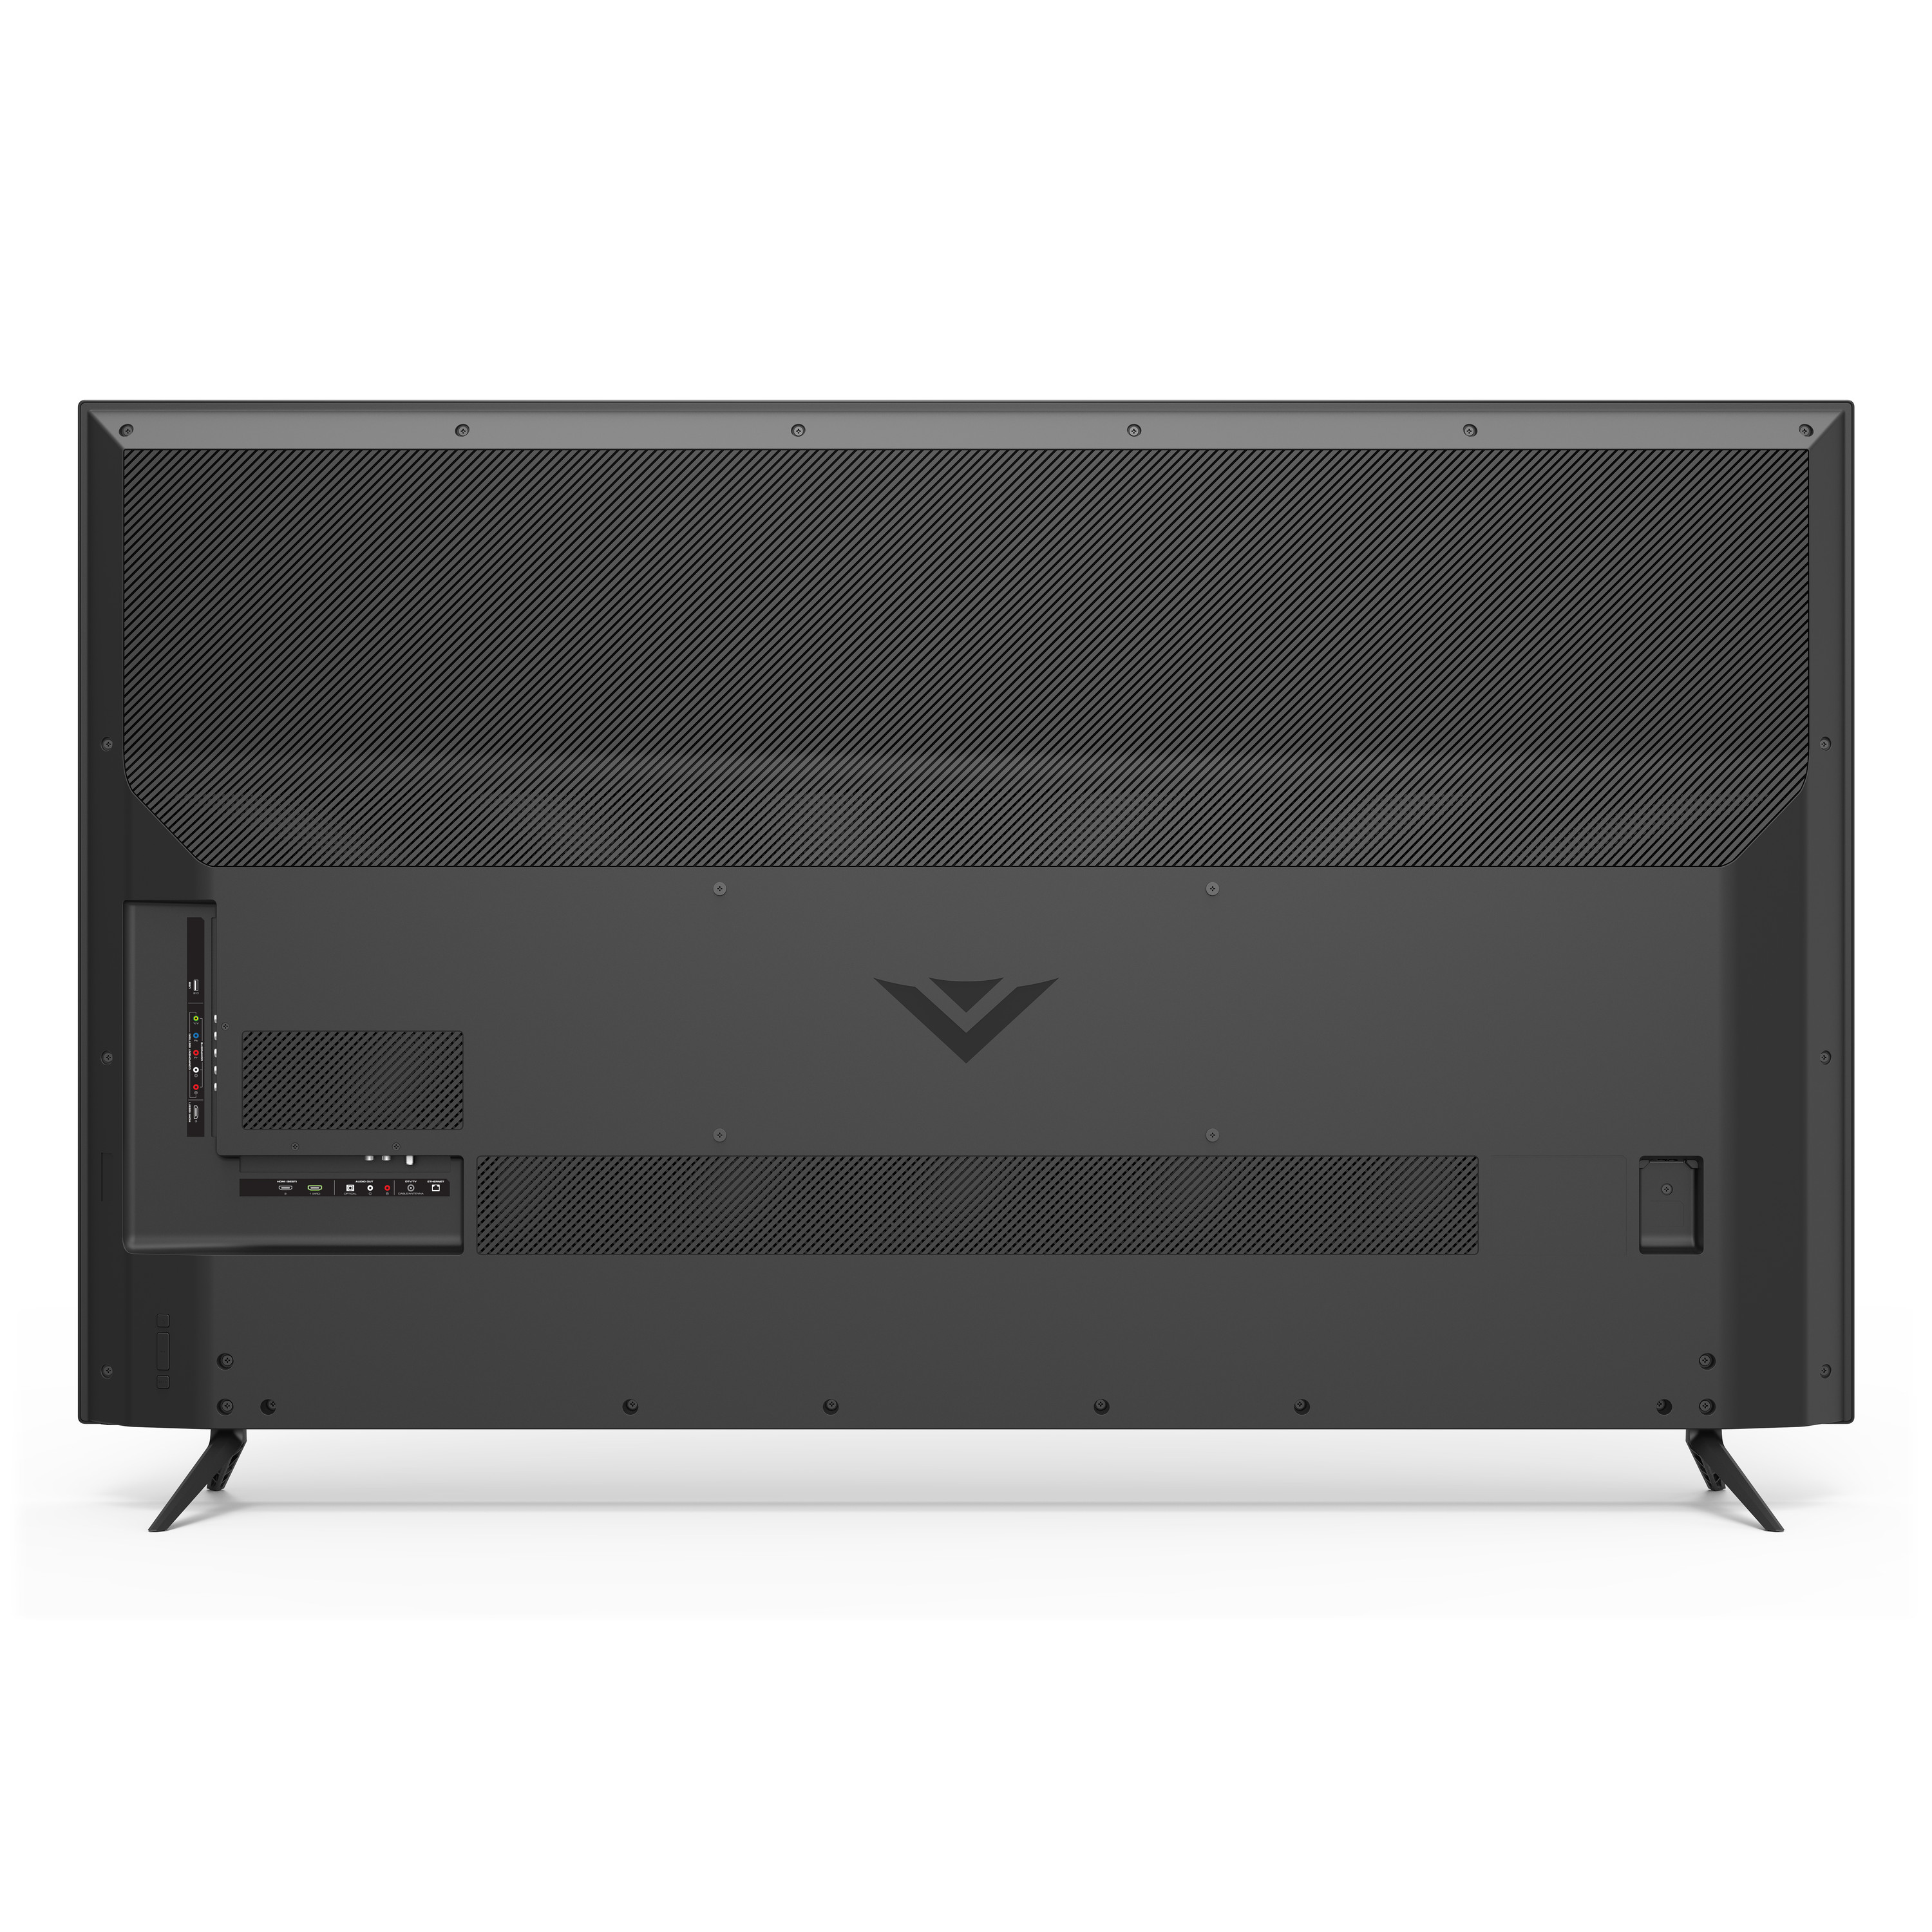 VIZIO 70" Class D-Series 4K (2160P) Ultra HD HDR Smart LED TV (D70-F3) (2018 Model) - image 4 of 13